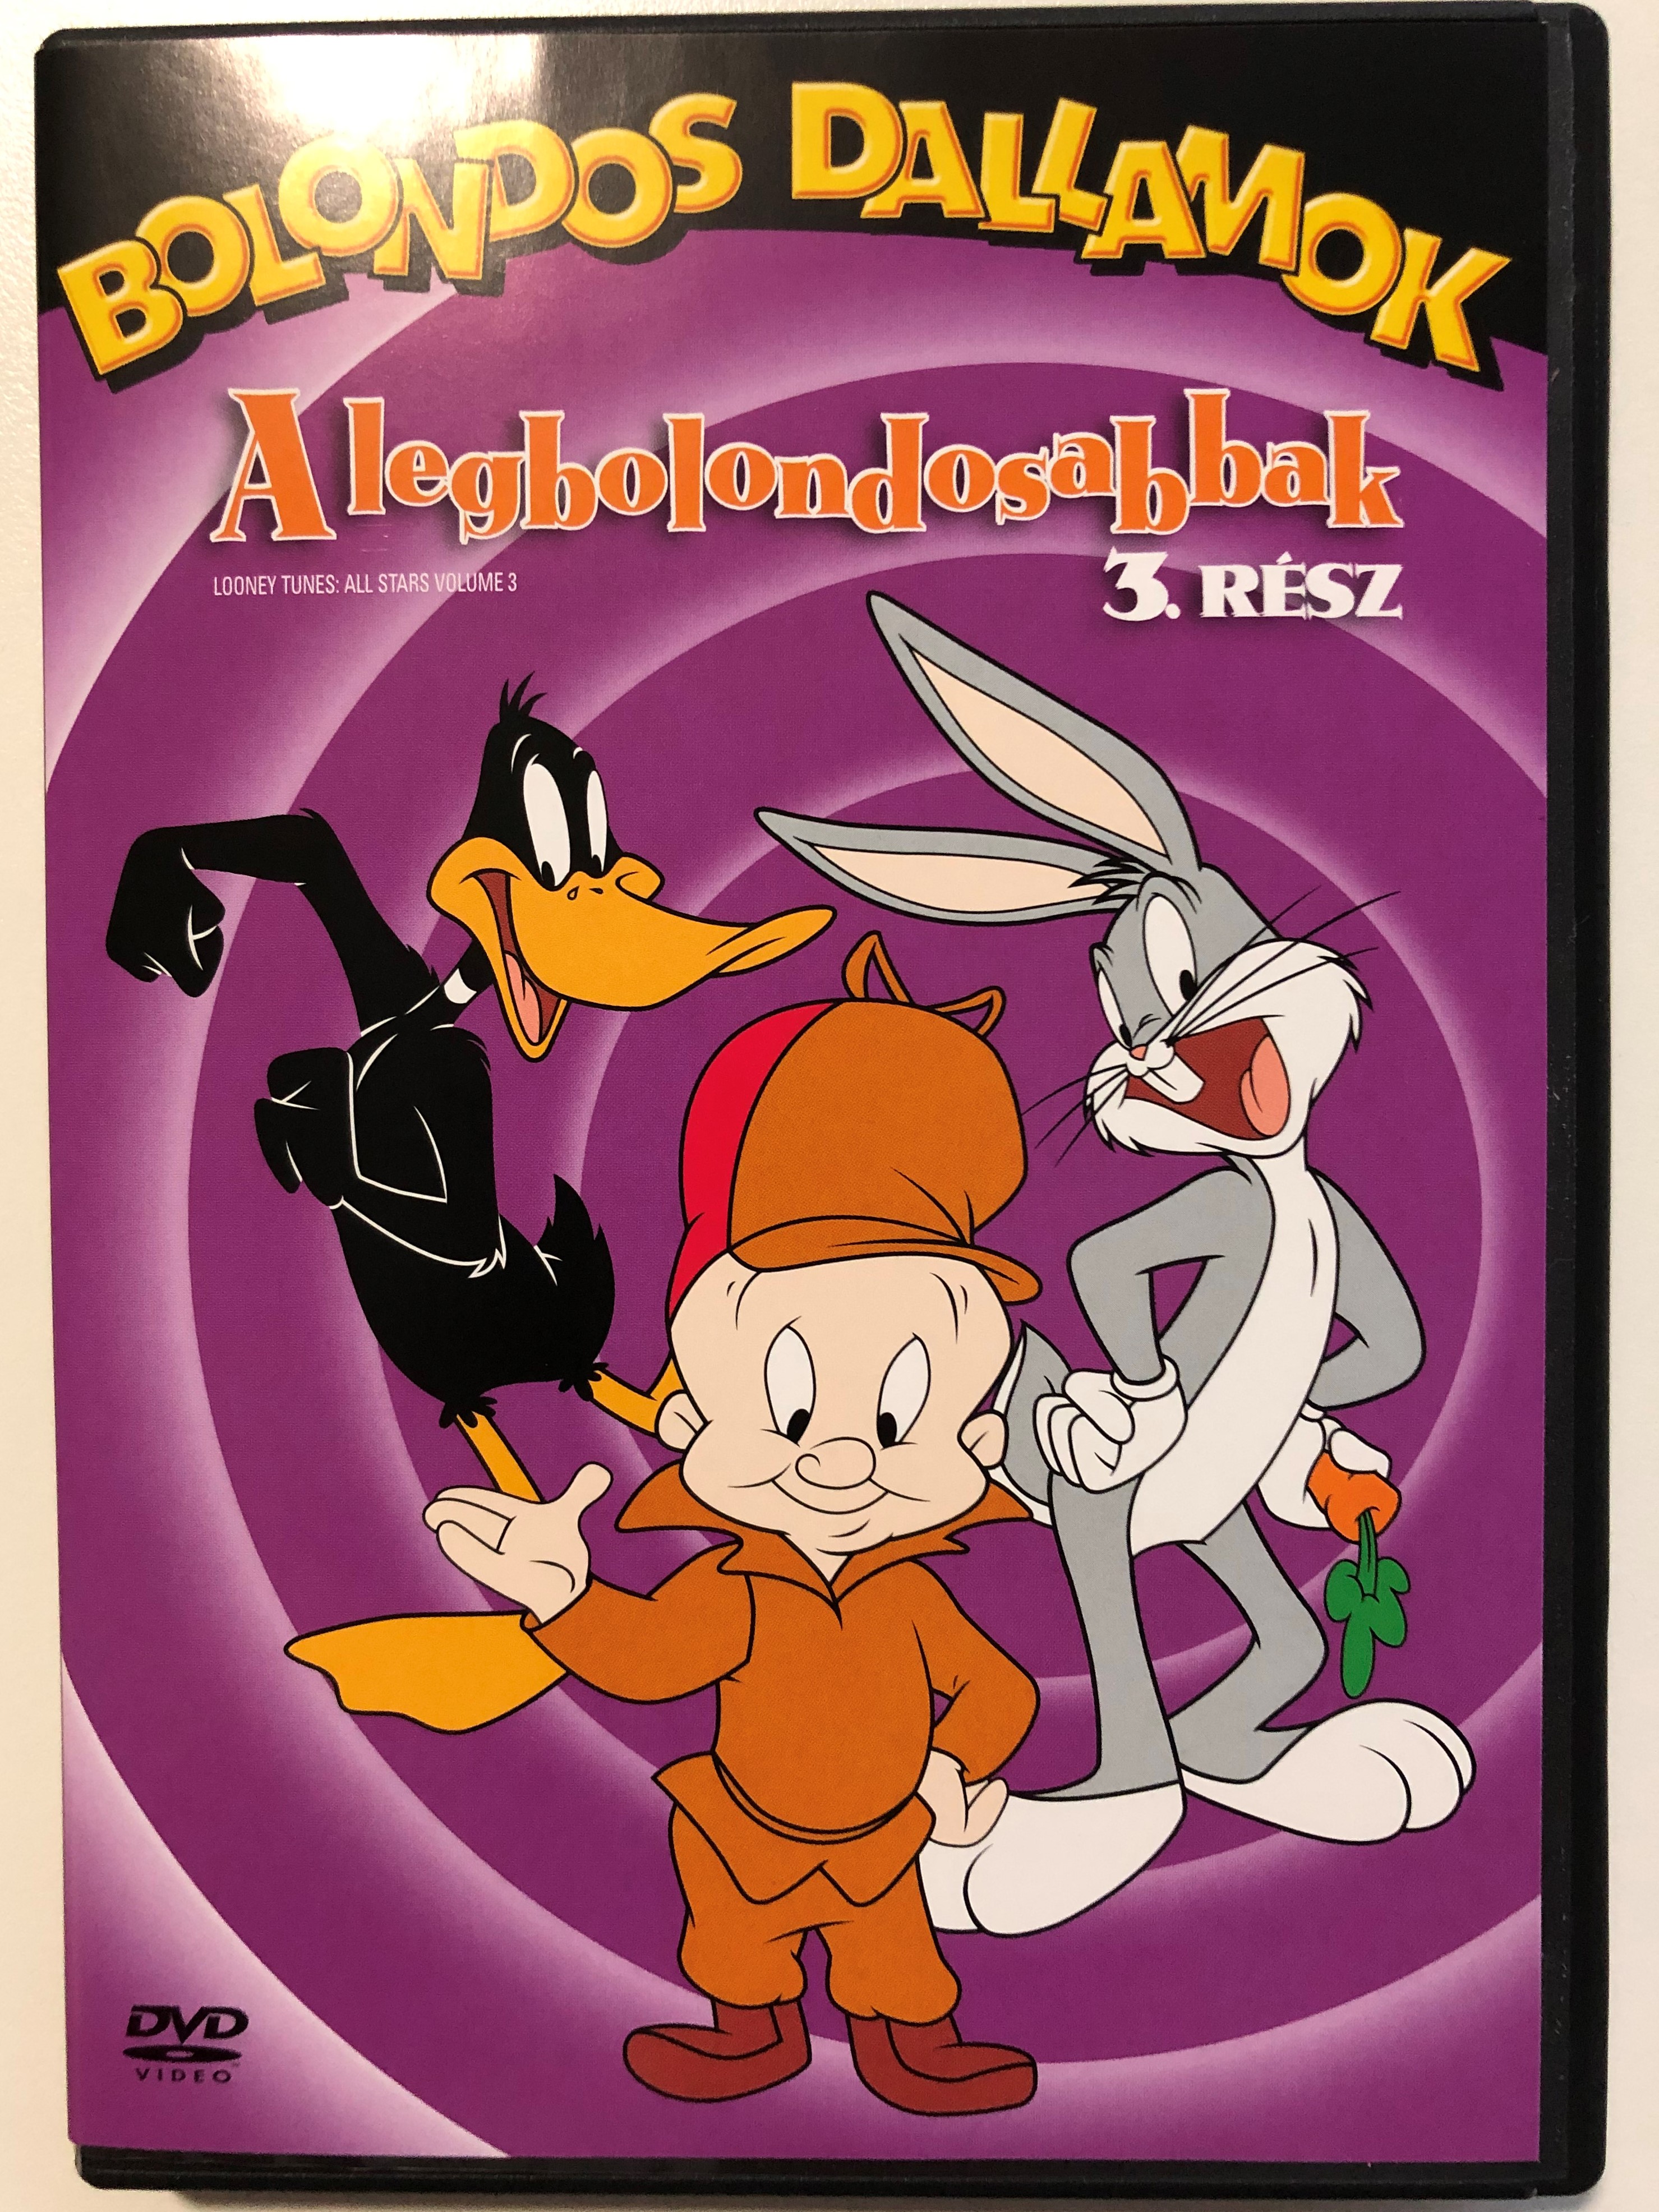 Looney Tunes: All Stars Volume 3 DVD Bolondos Dallamok - A legbolondosabbak  3. rész / Directed by Chuck Jones, Robert McKimson, Friz Freleng / 15  episodes - 15 epizód - bibleinmylanguage